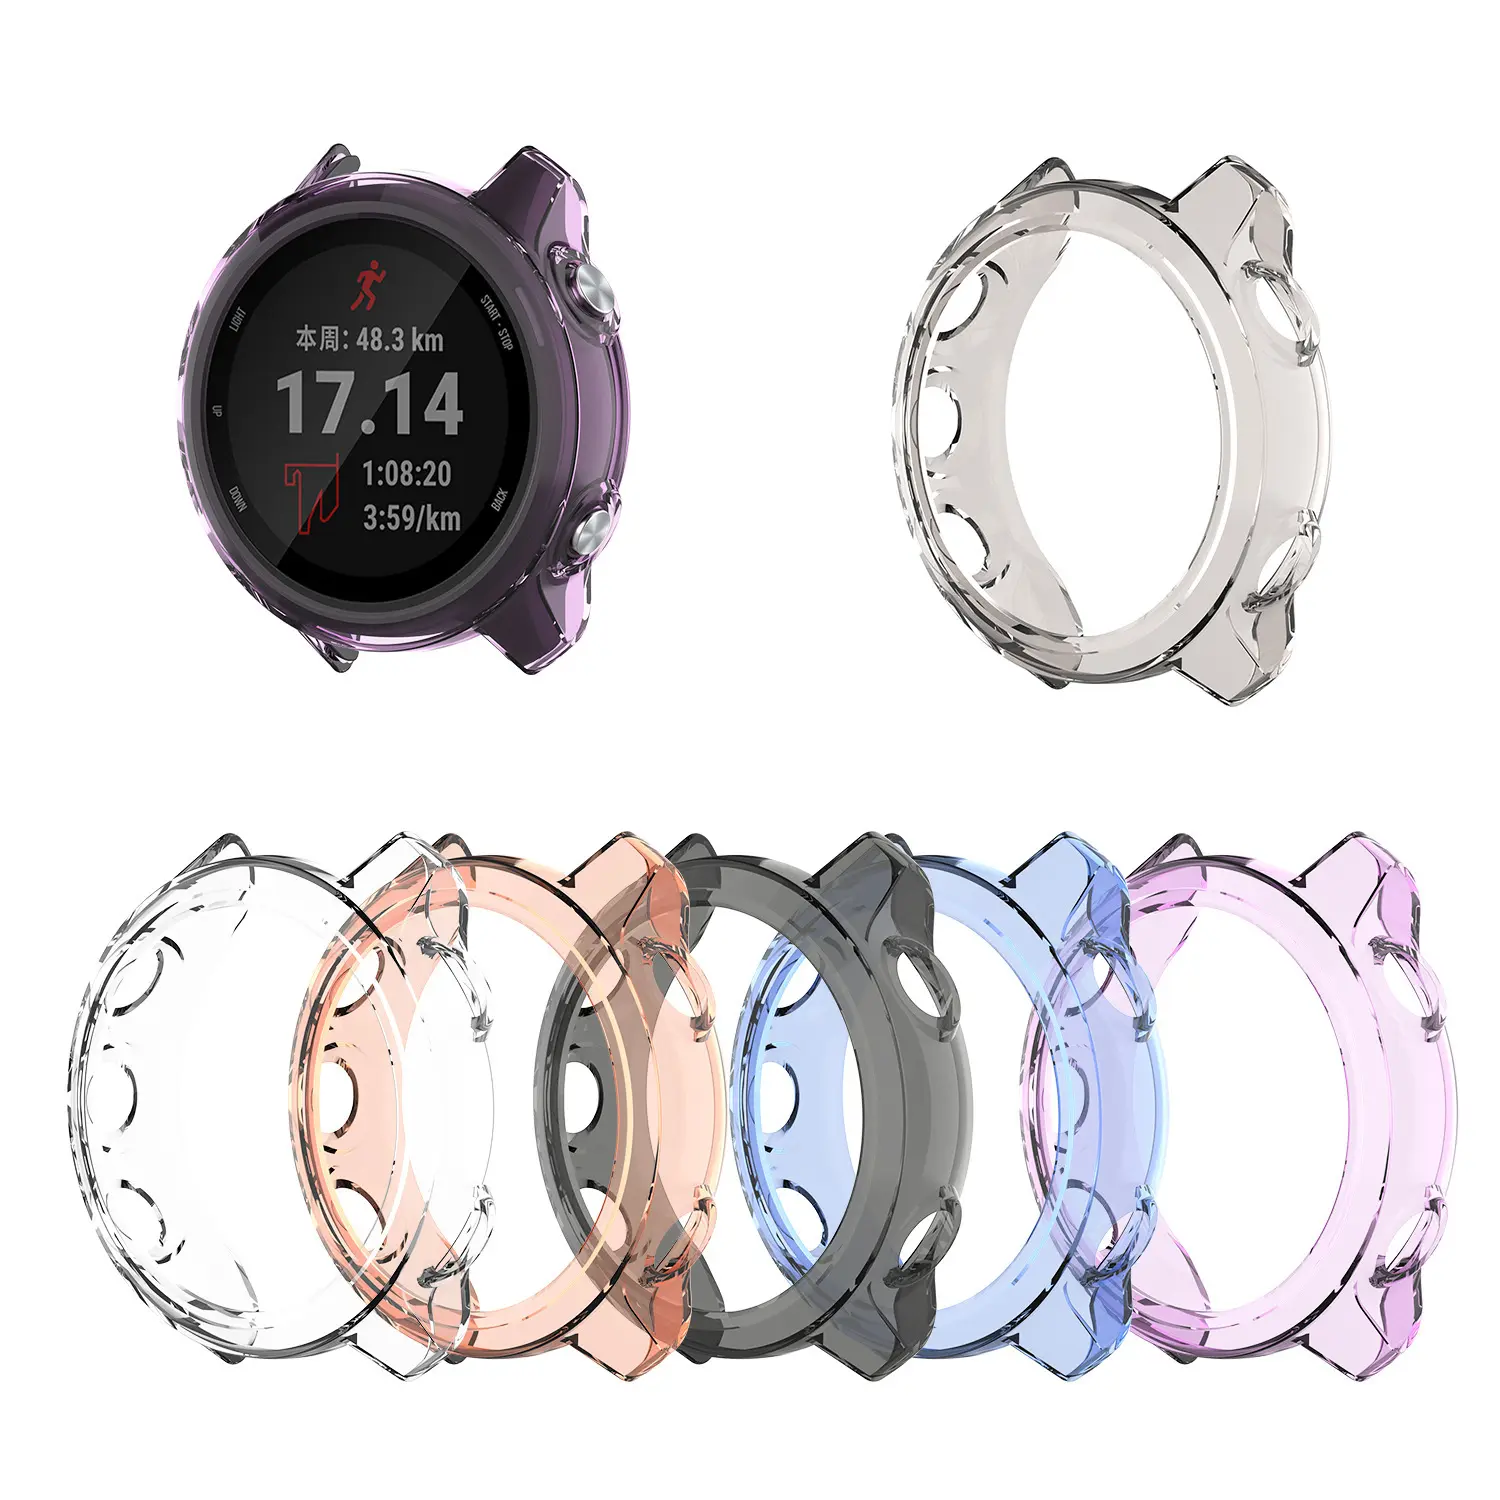 Qiman TPU Protector Case For Garmin Forerunner 645M 645 Watch Band Strap Soft Cover Shell For Garmin Forerunner 645 GPS Watch